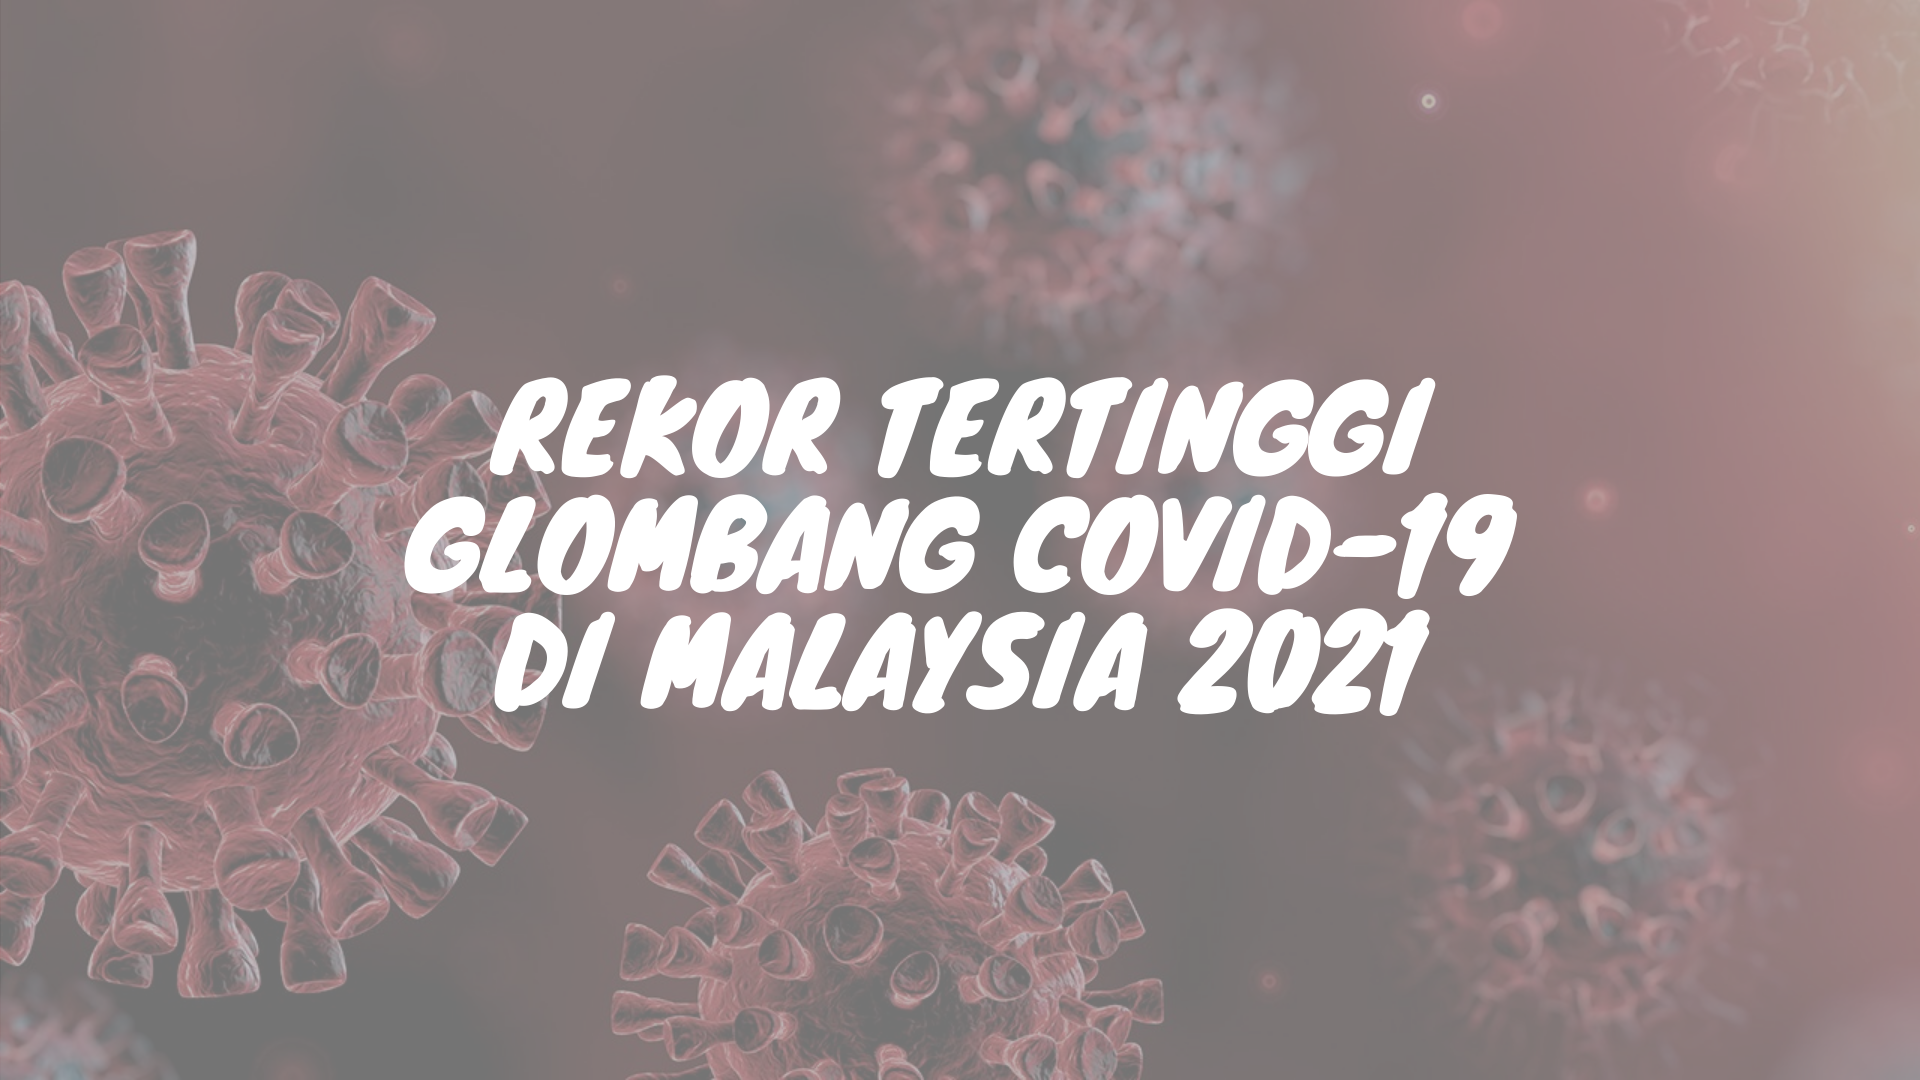 Rekor Tertinggi Glombang Covid-19 di Malaysia 2021